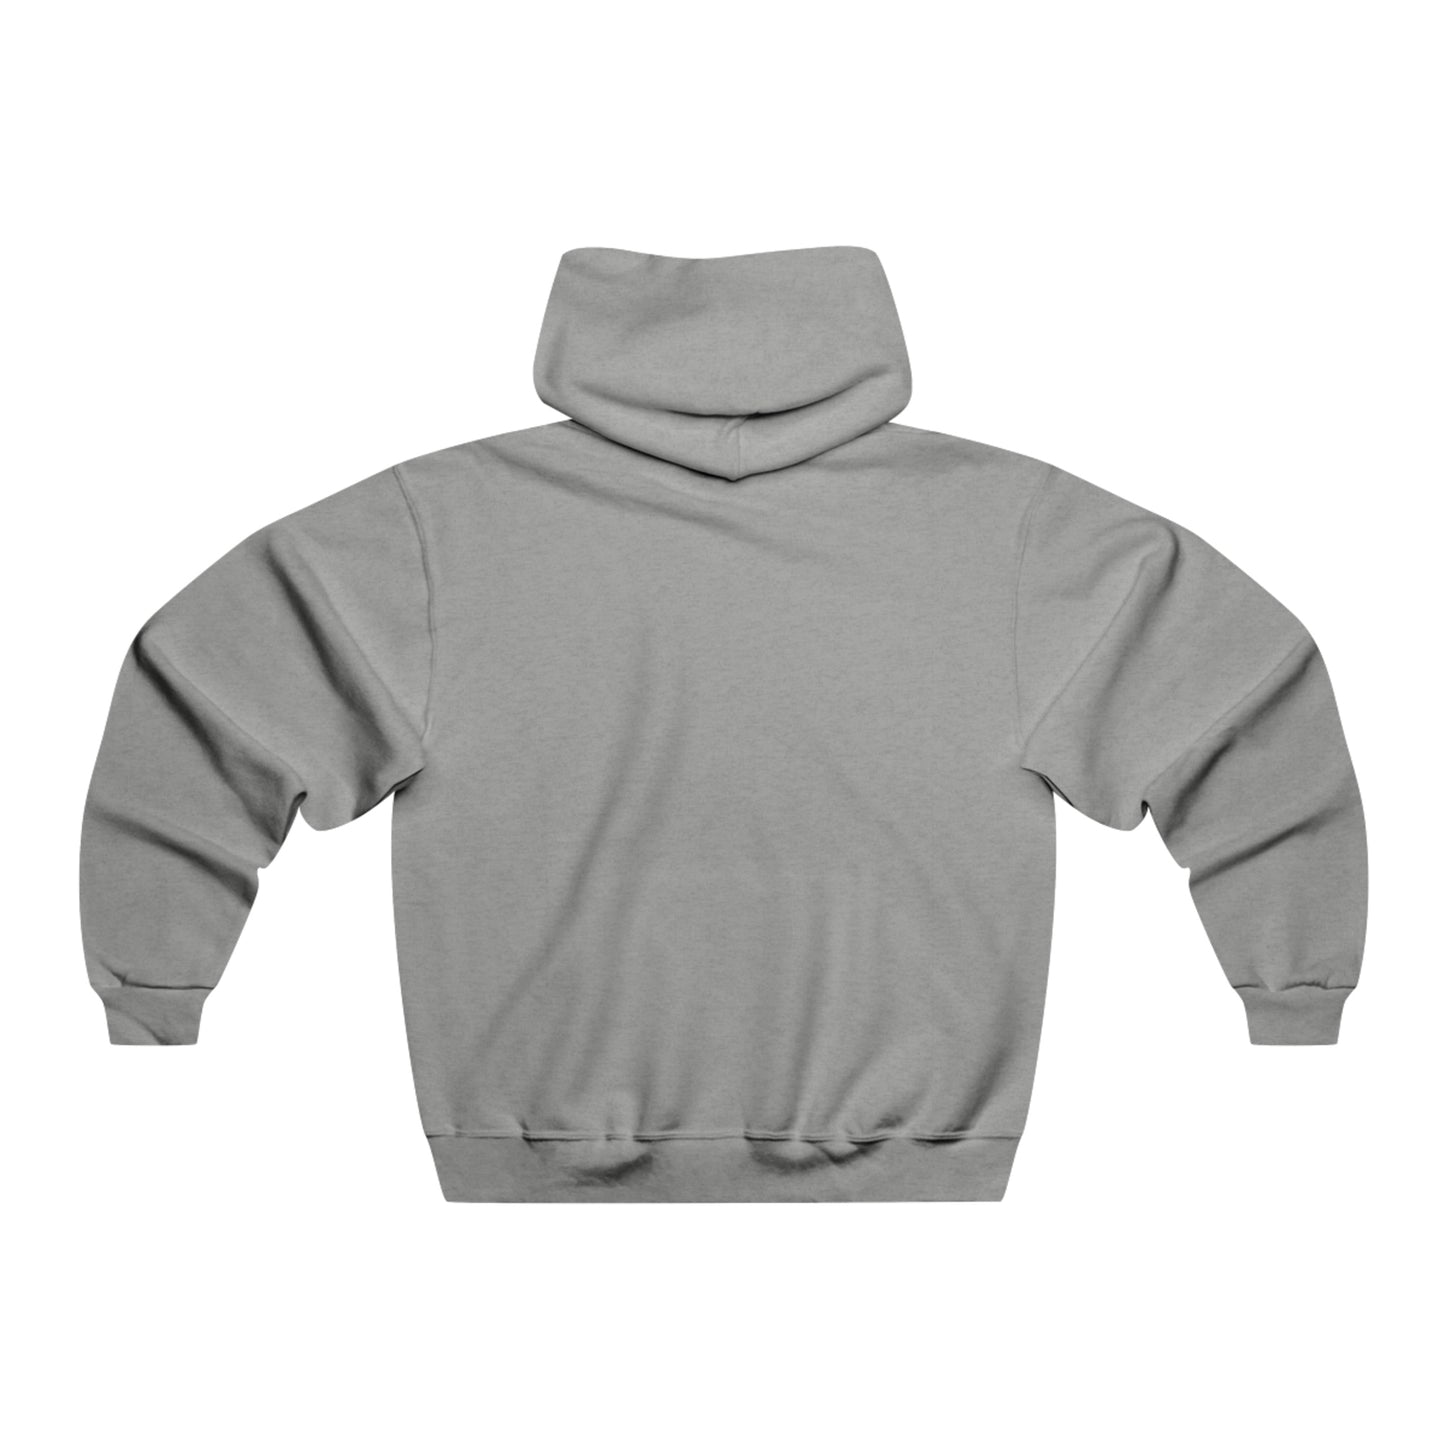 Wance (white & teal) Hooded Sweatshirt